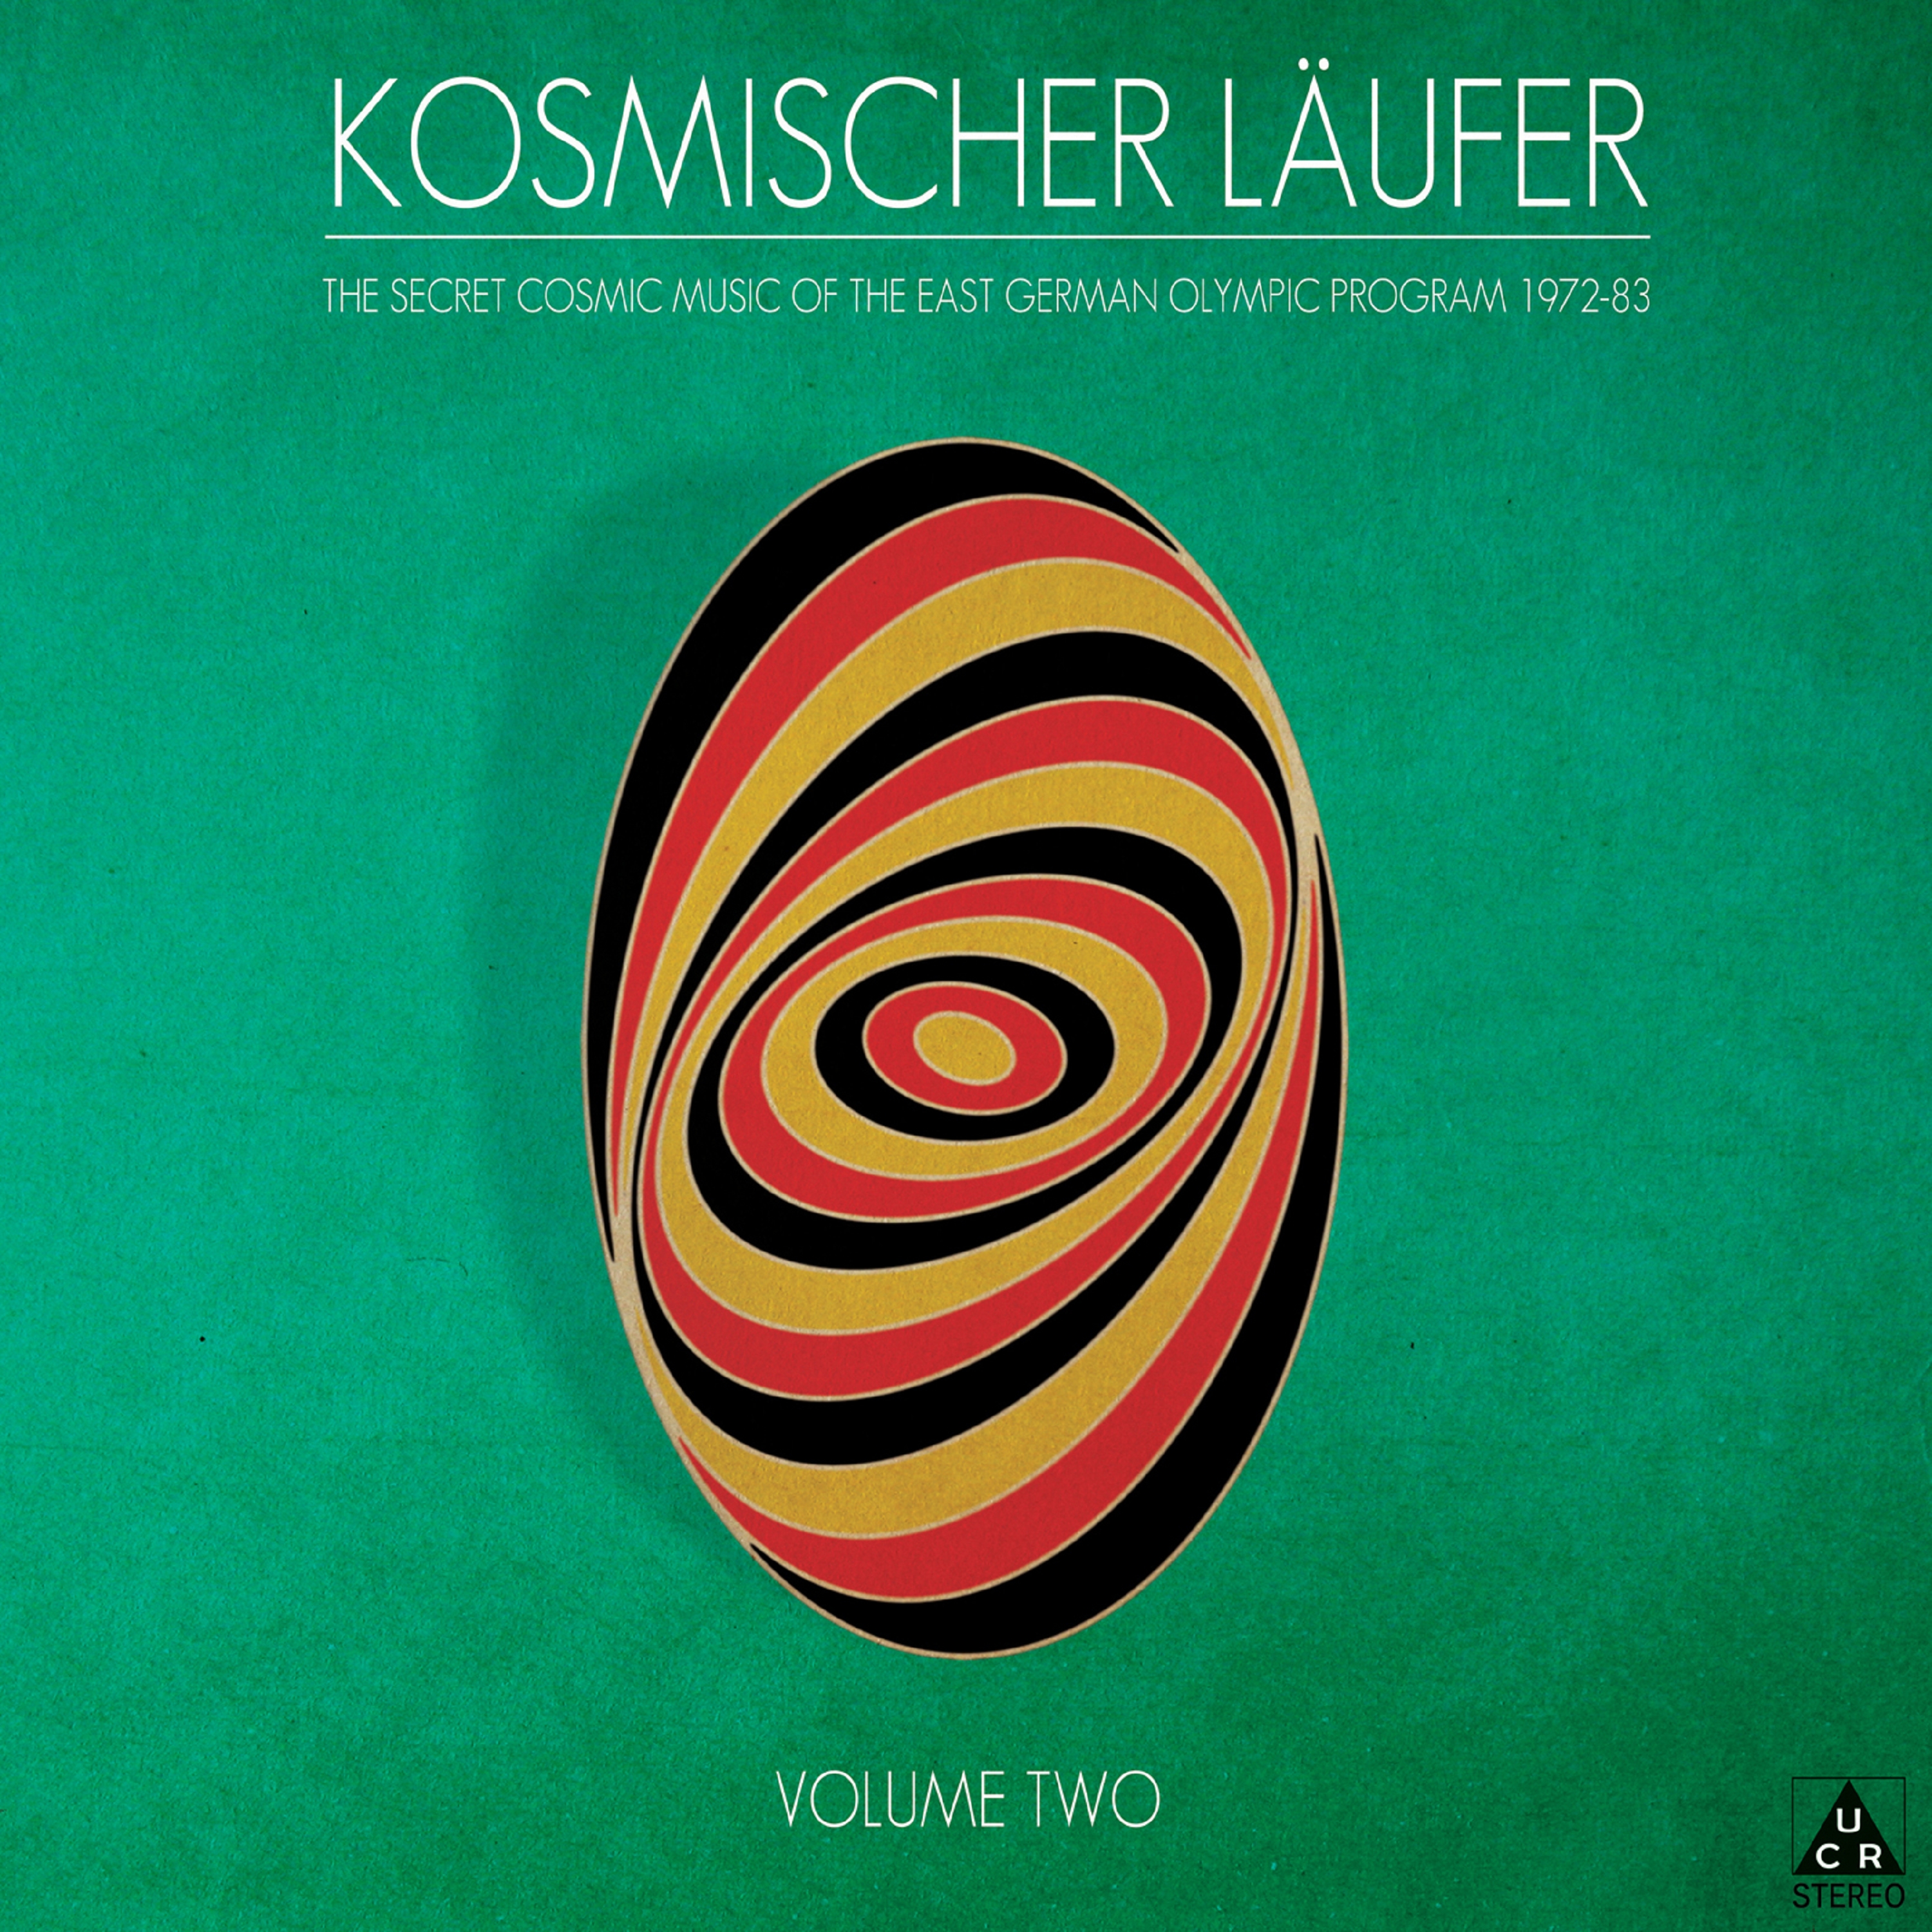 The Secret Cosmic Music of the East German Olympic Program 1972-83, Vol. 2